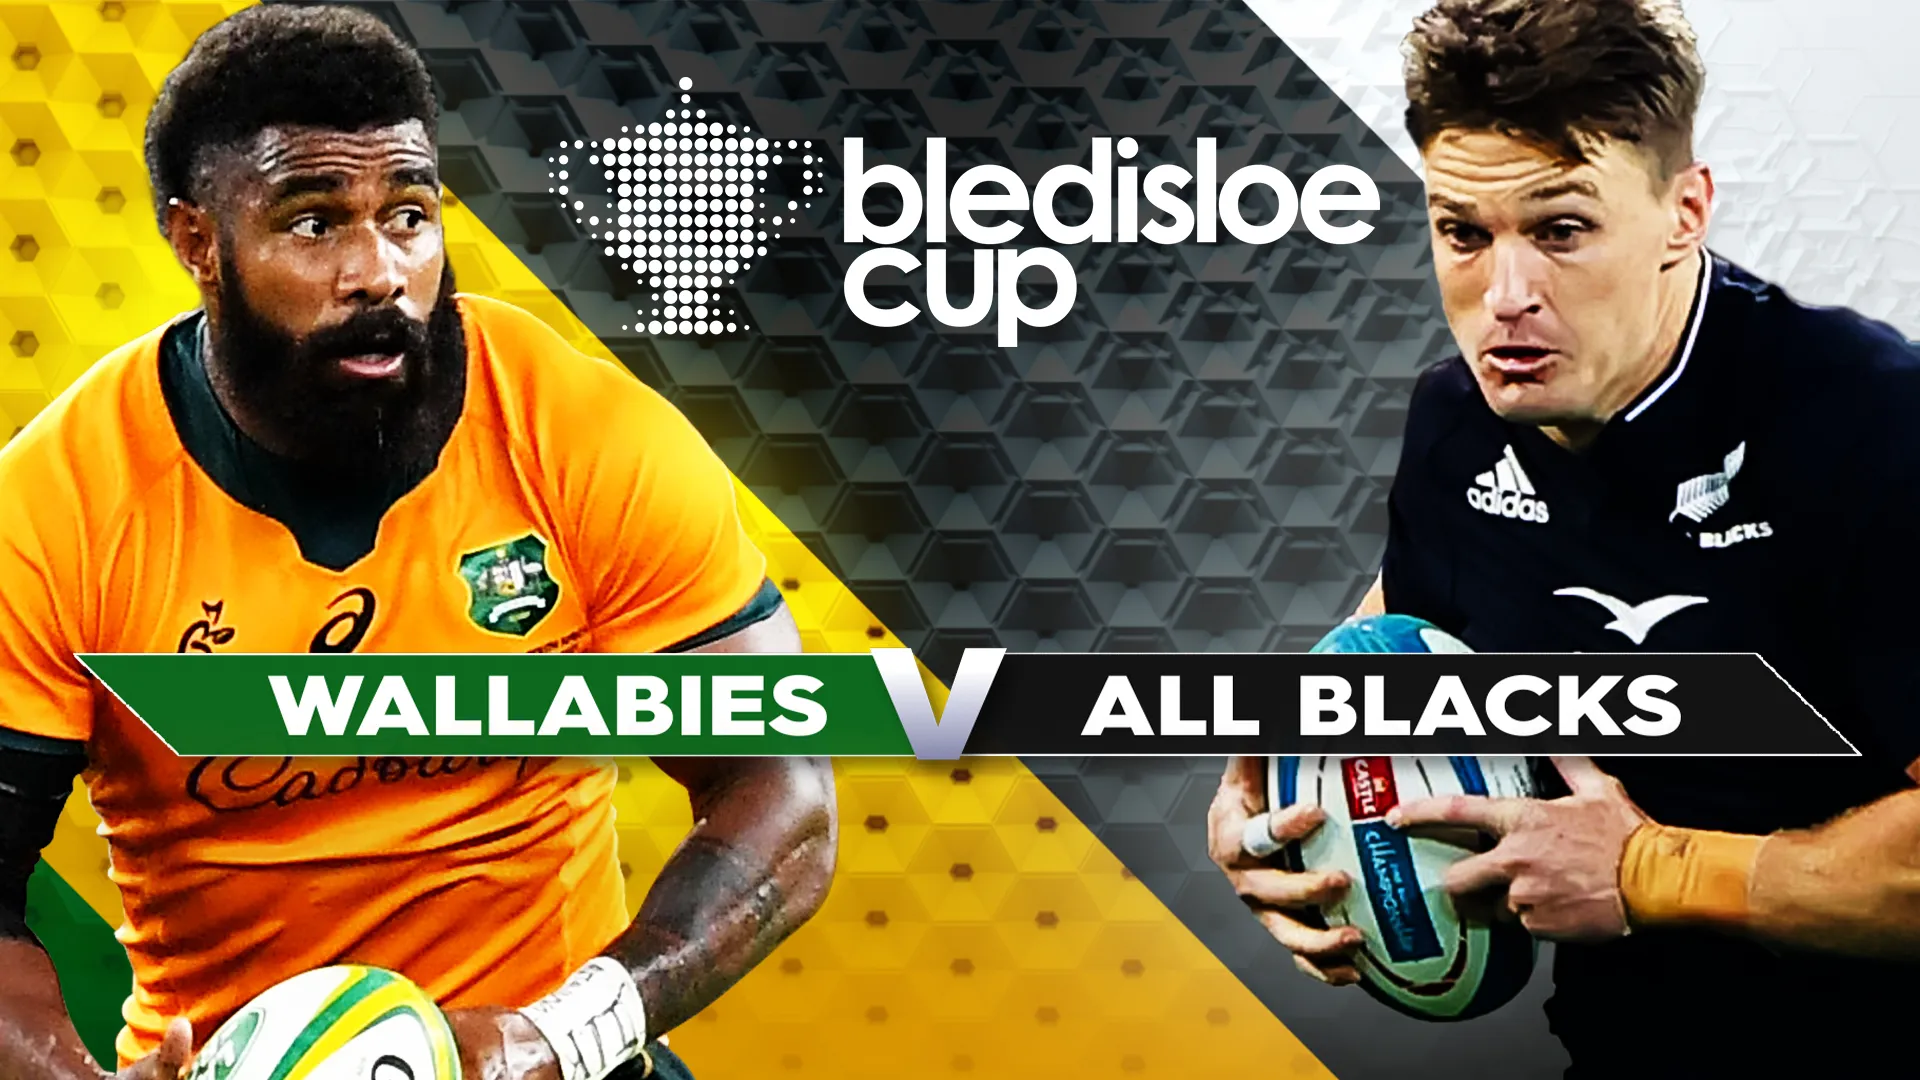 All Blacks on X: Bled two team sheet 😤 #BledisloeCup   / X